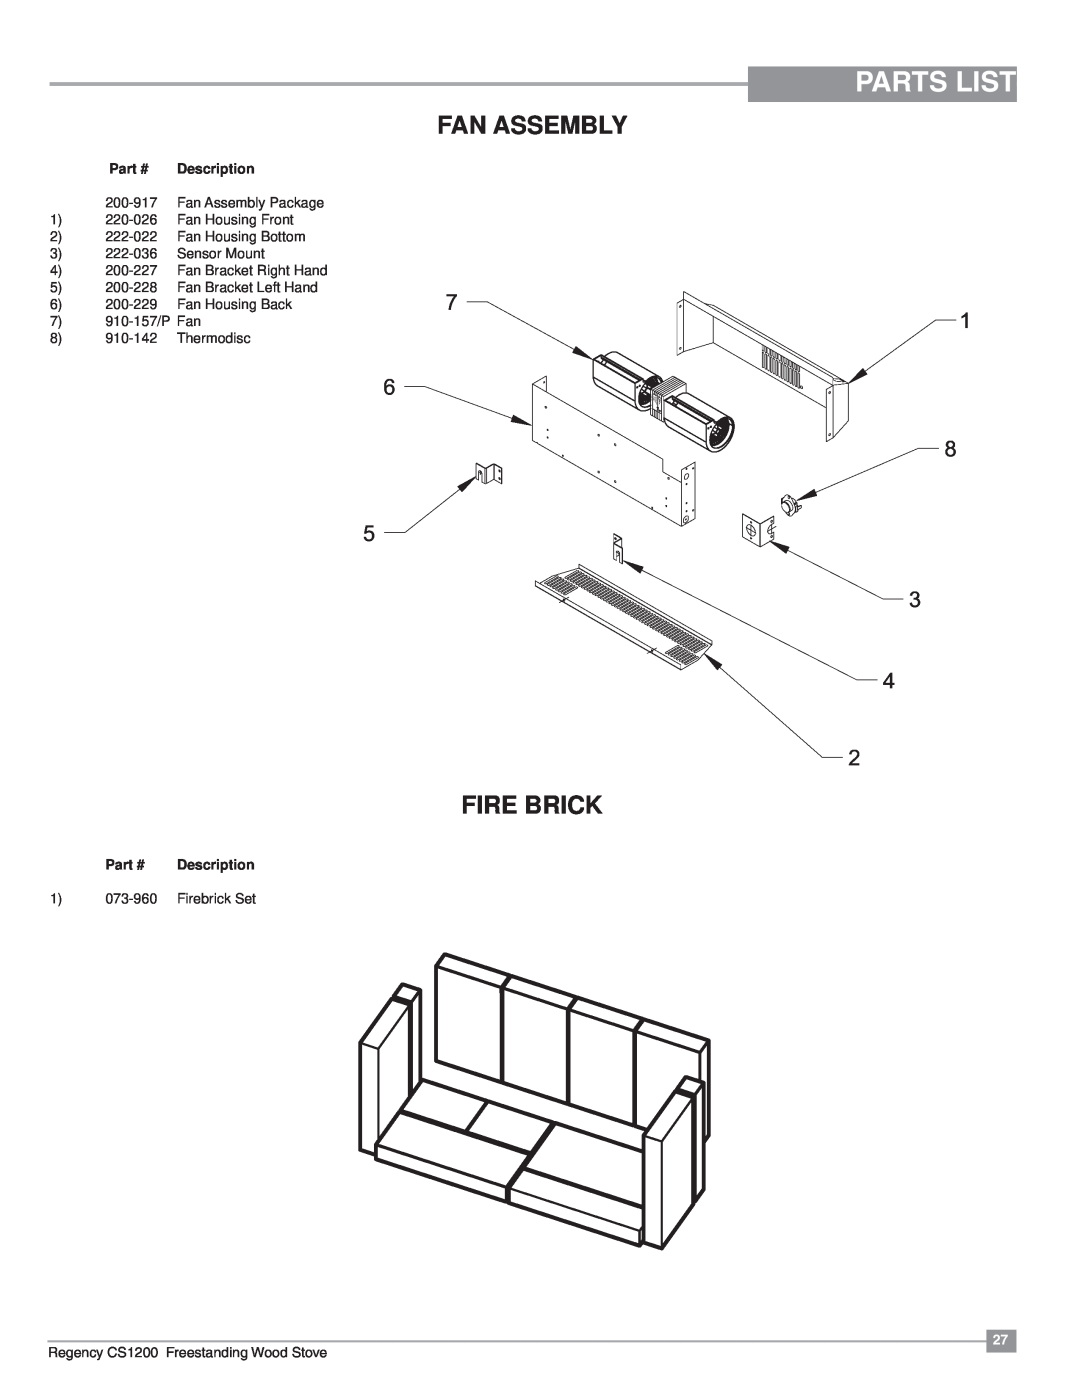 Regency CS1200 installation manual Parts List, Fan Assembly, Fire Brick, 1 8 3, Description 